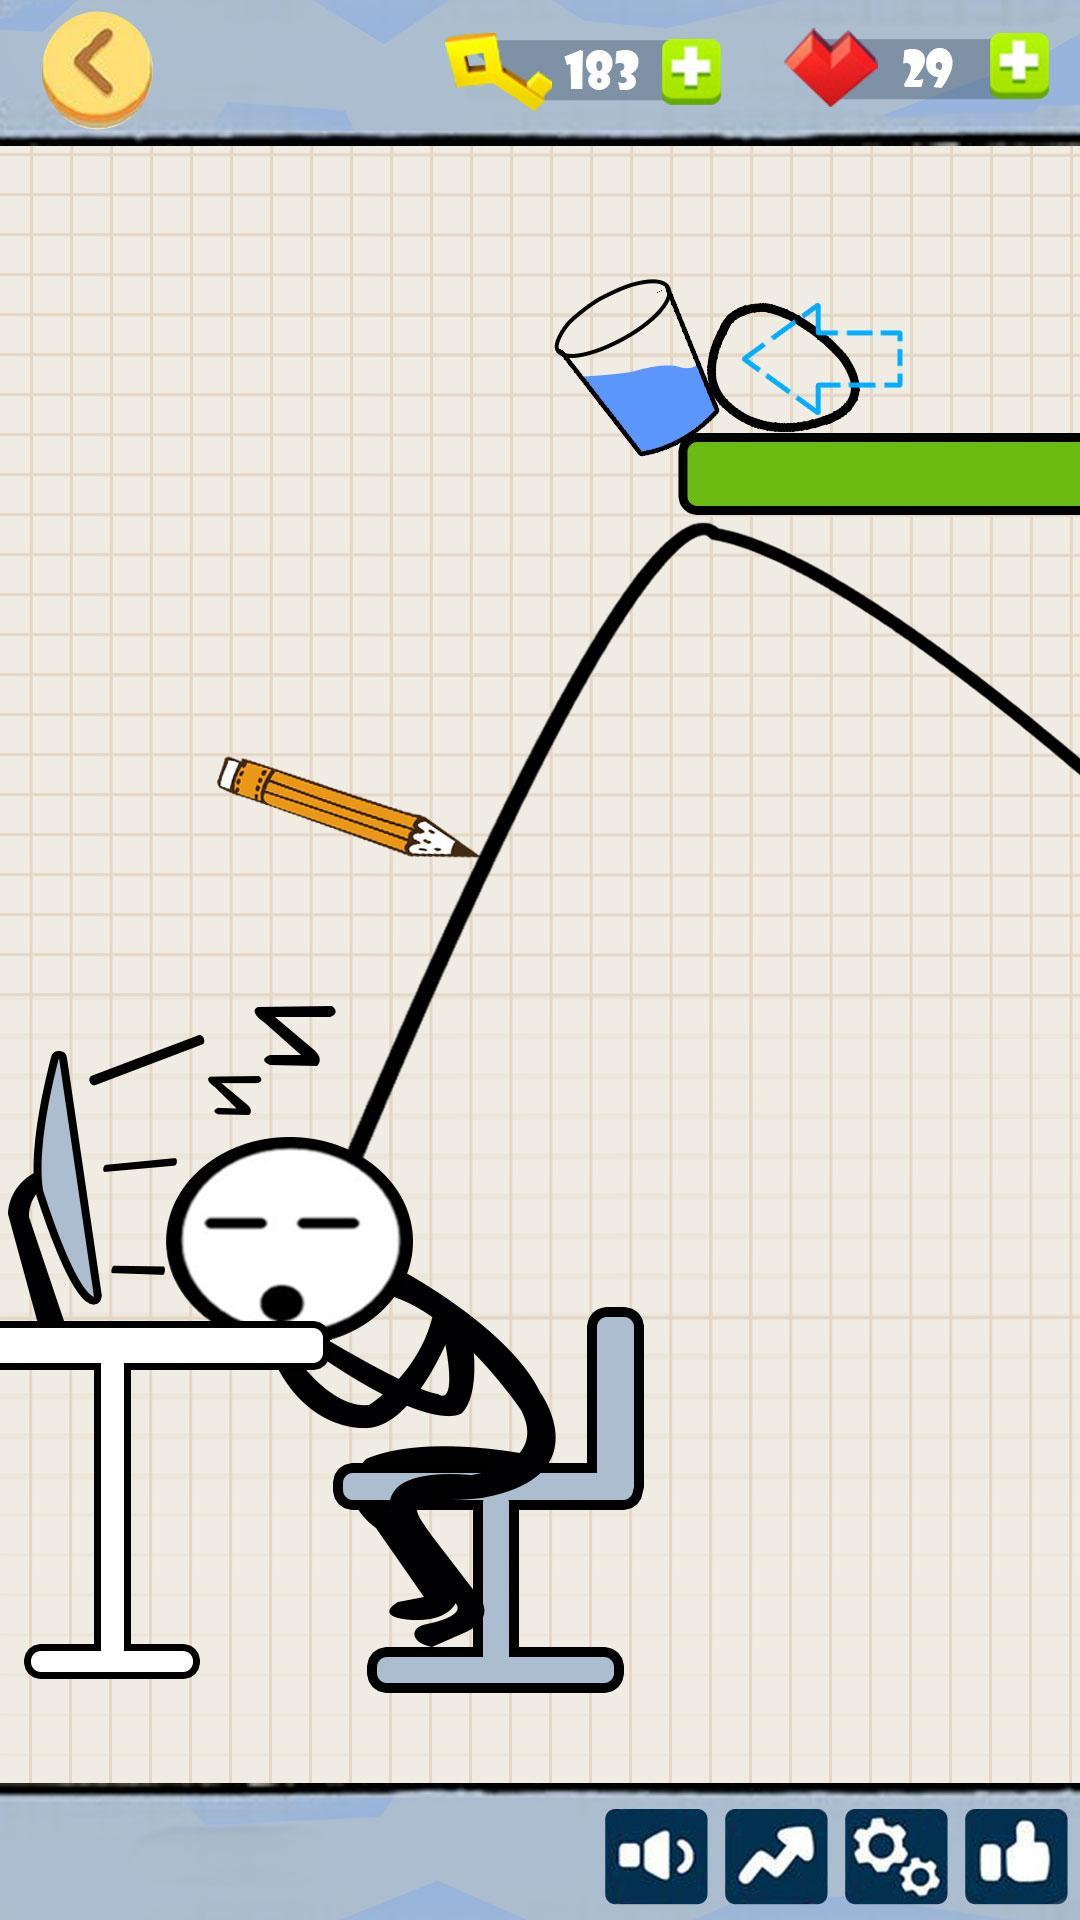 Screenshot 1 of Bad Luck Stickman: adictivo juego casual de línea de dibujo 1.1.2